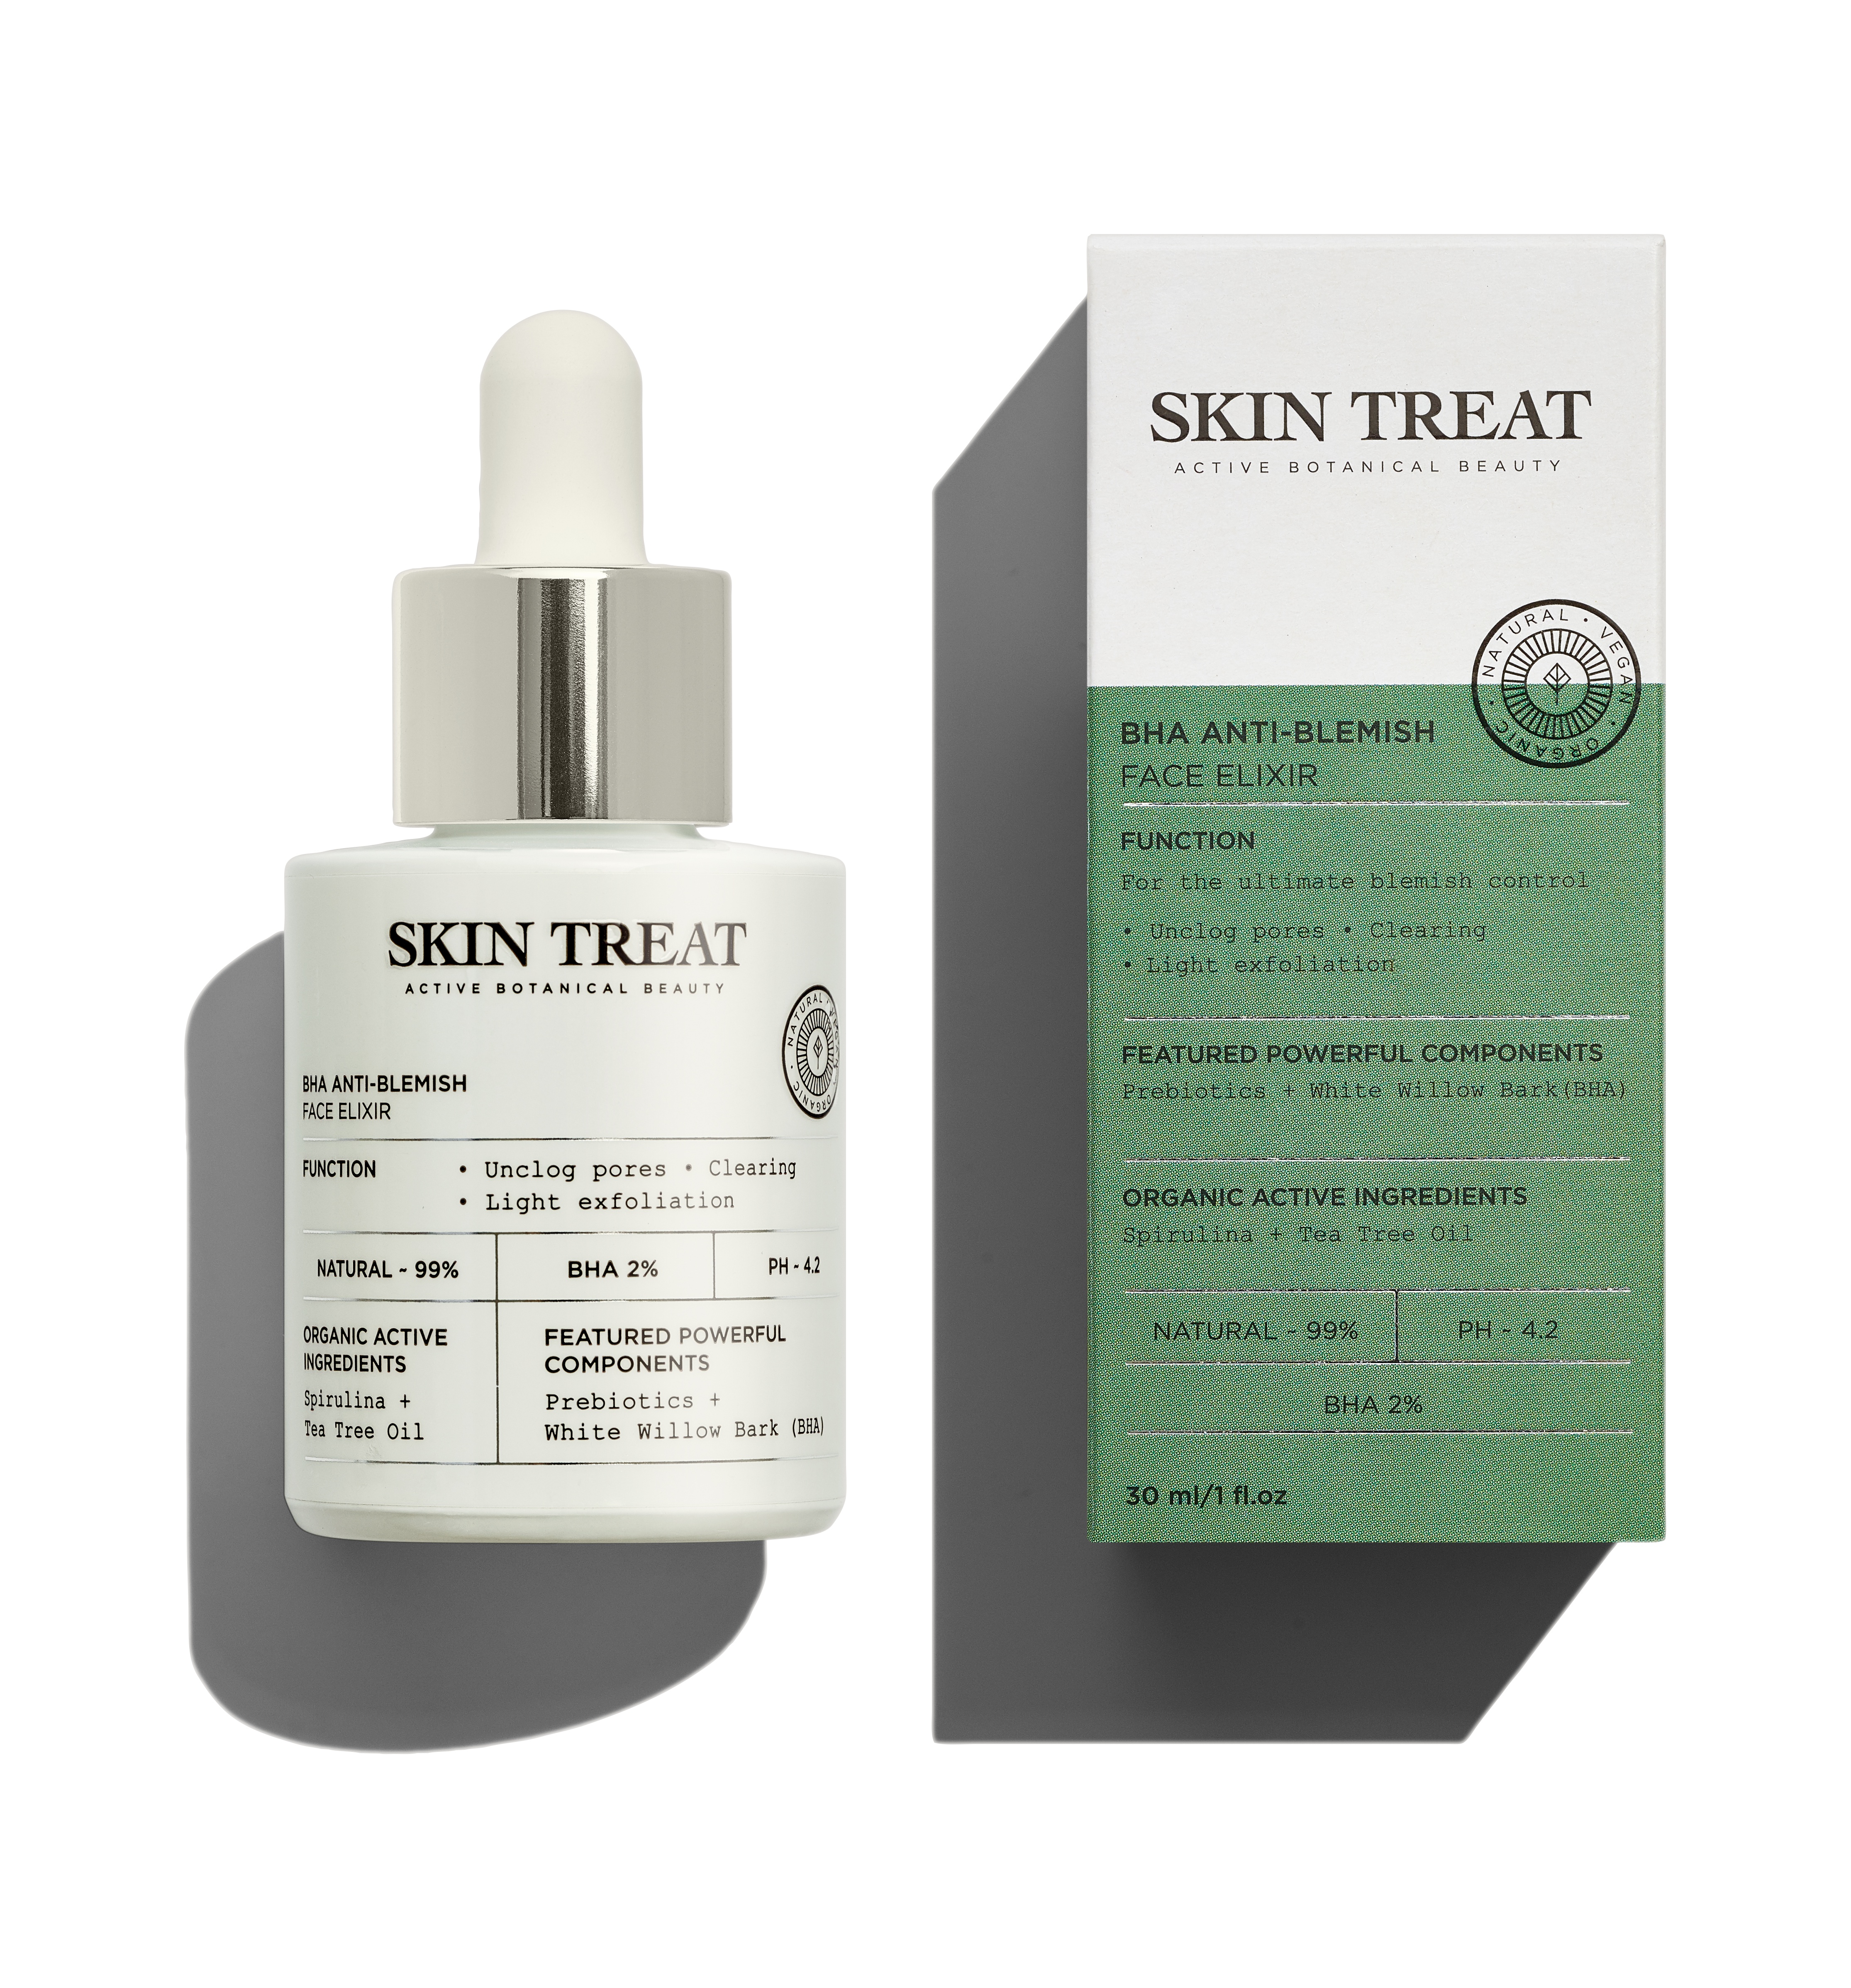 Skin Treat Bha Anti-Blemish Face Elixir